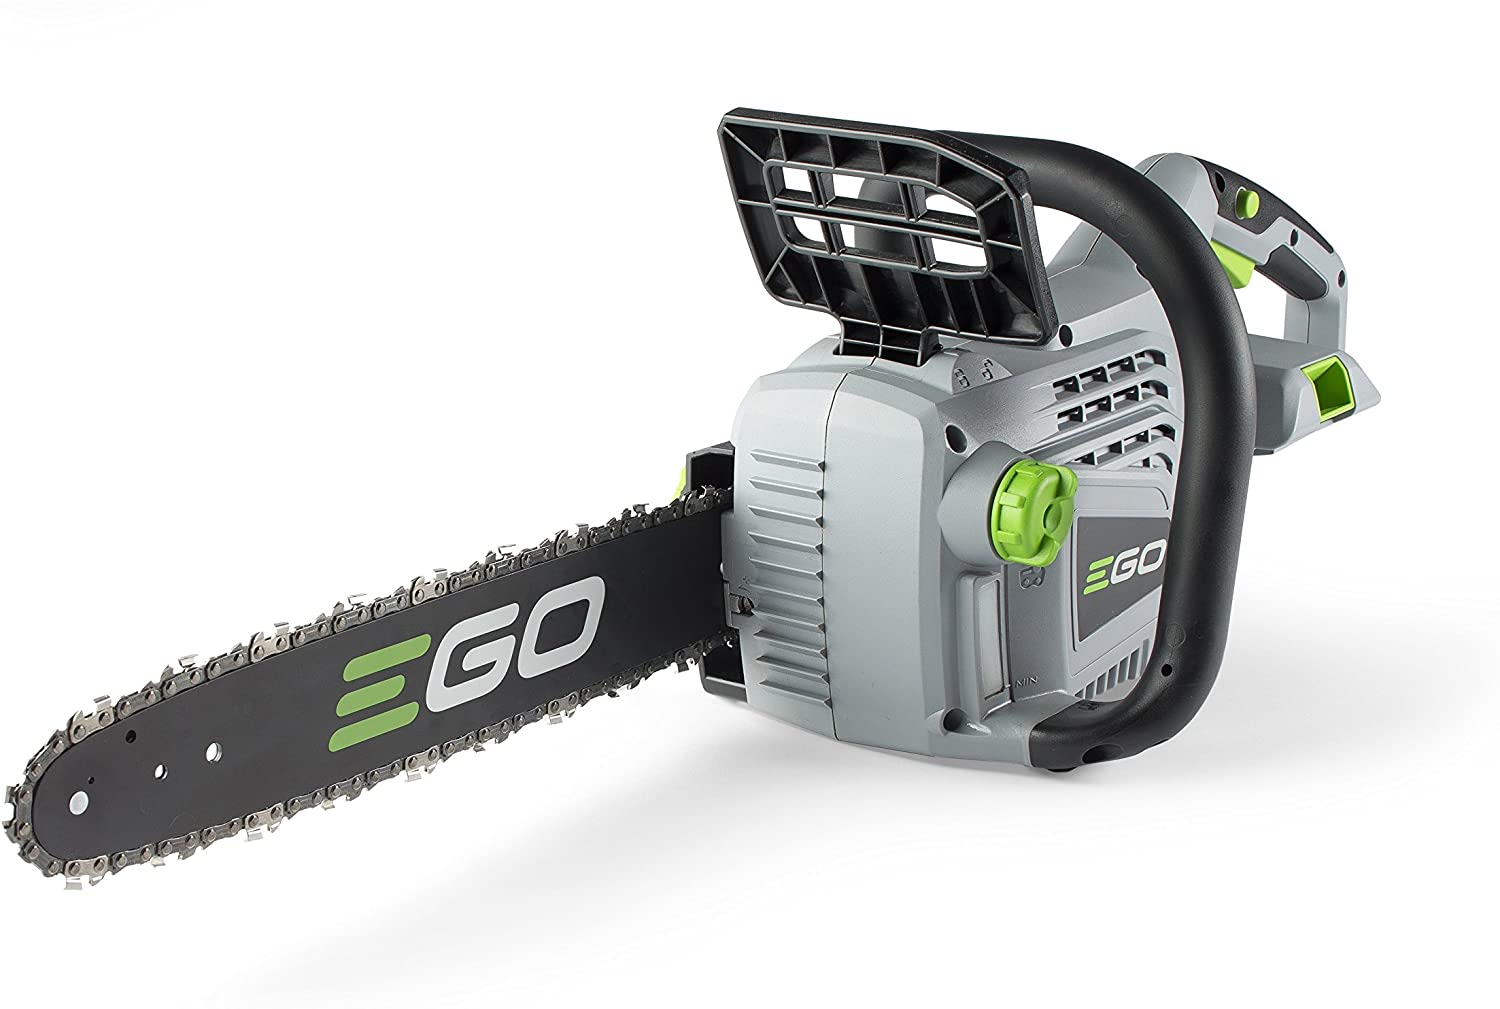 EGO Power+ CS1400 Cordless Chainsaw